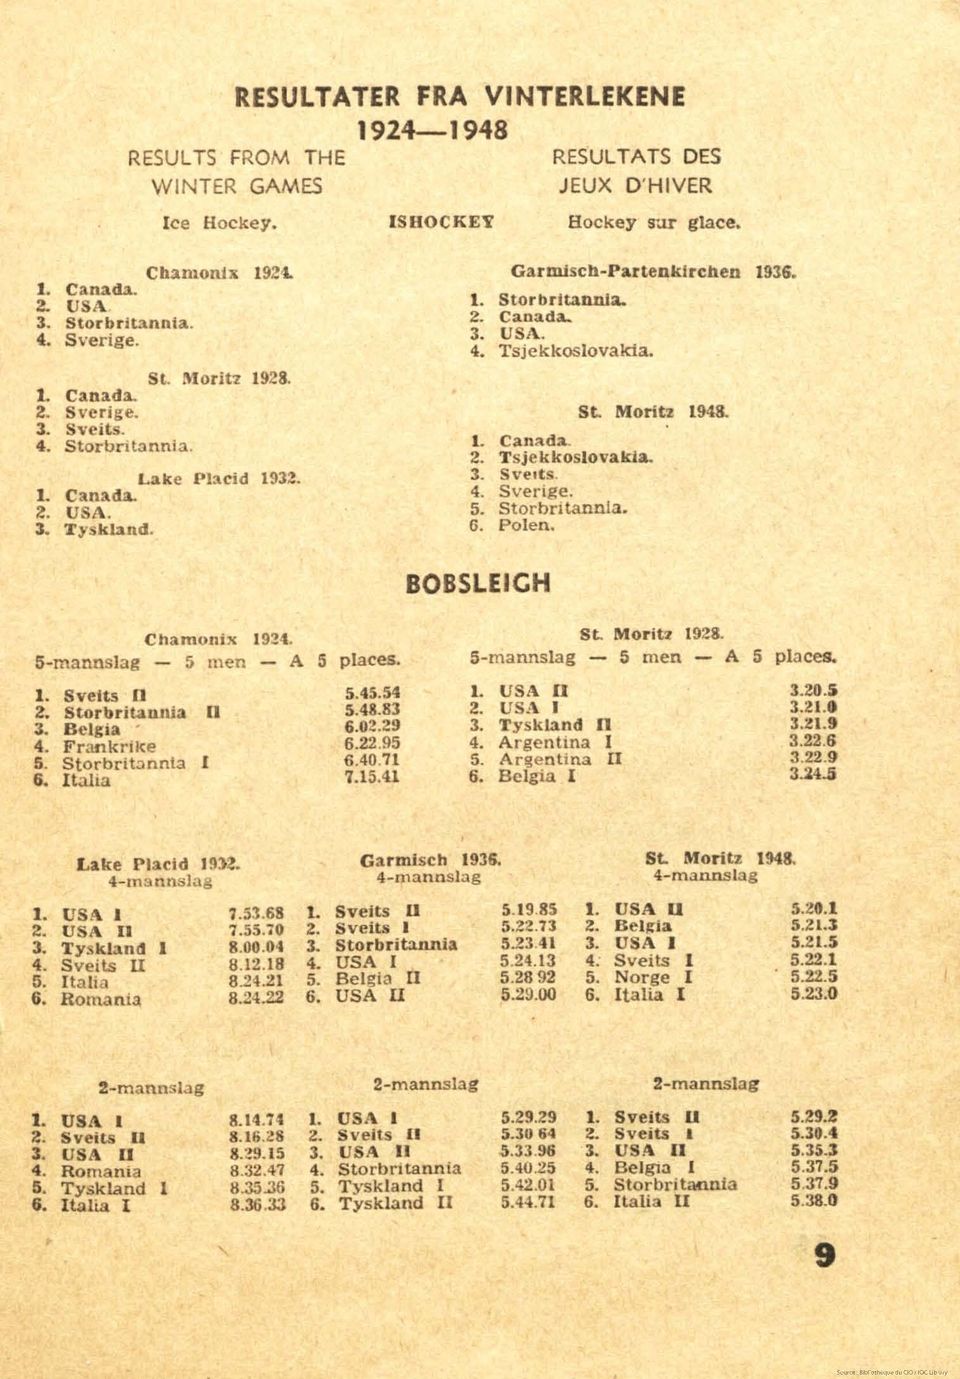 St Moriti 1948. 1. Canada 2. Tsjekkoslovakia. 3. Sveits 4. Sverige. 5. Storbritannia. 6. Polen. BOBSLEIGH Chamonix 1924.